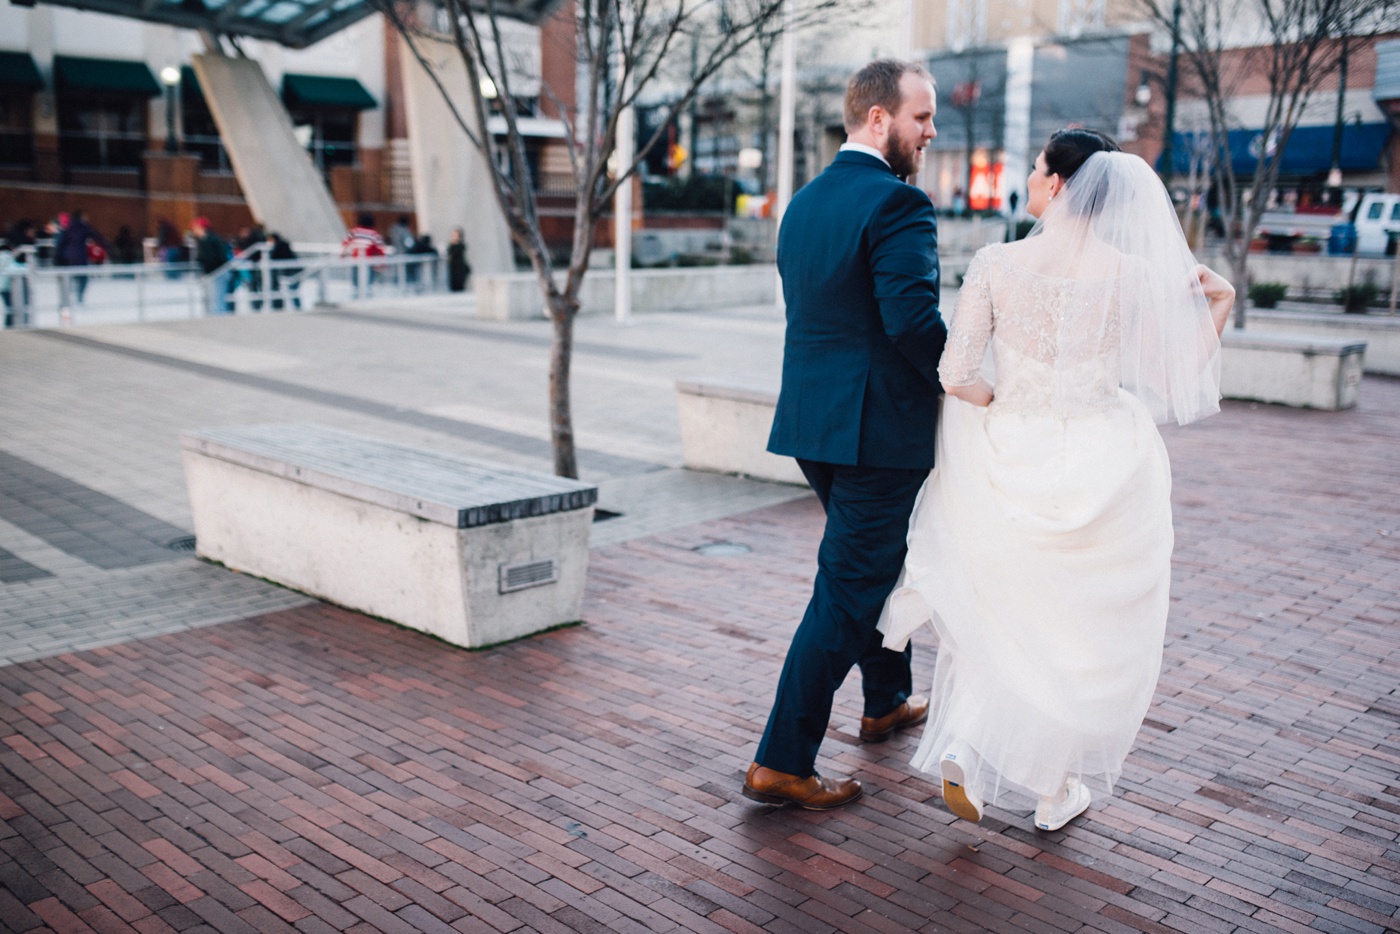 Amy + Jacob - Downtown Silver Spring Wedding Portraits - Maryland Wedding Photographer - Alison Dunn Photography photo